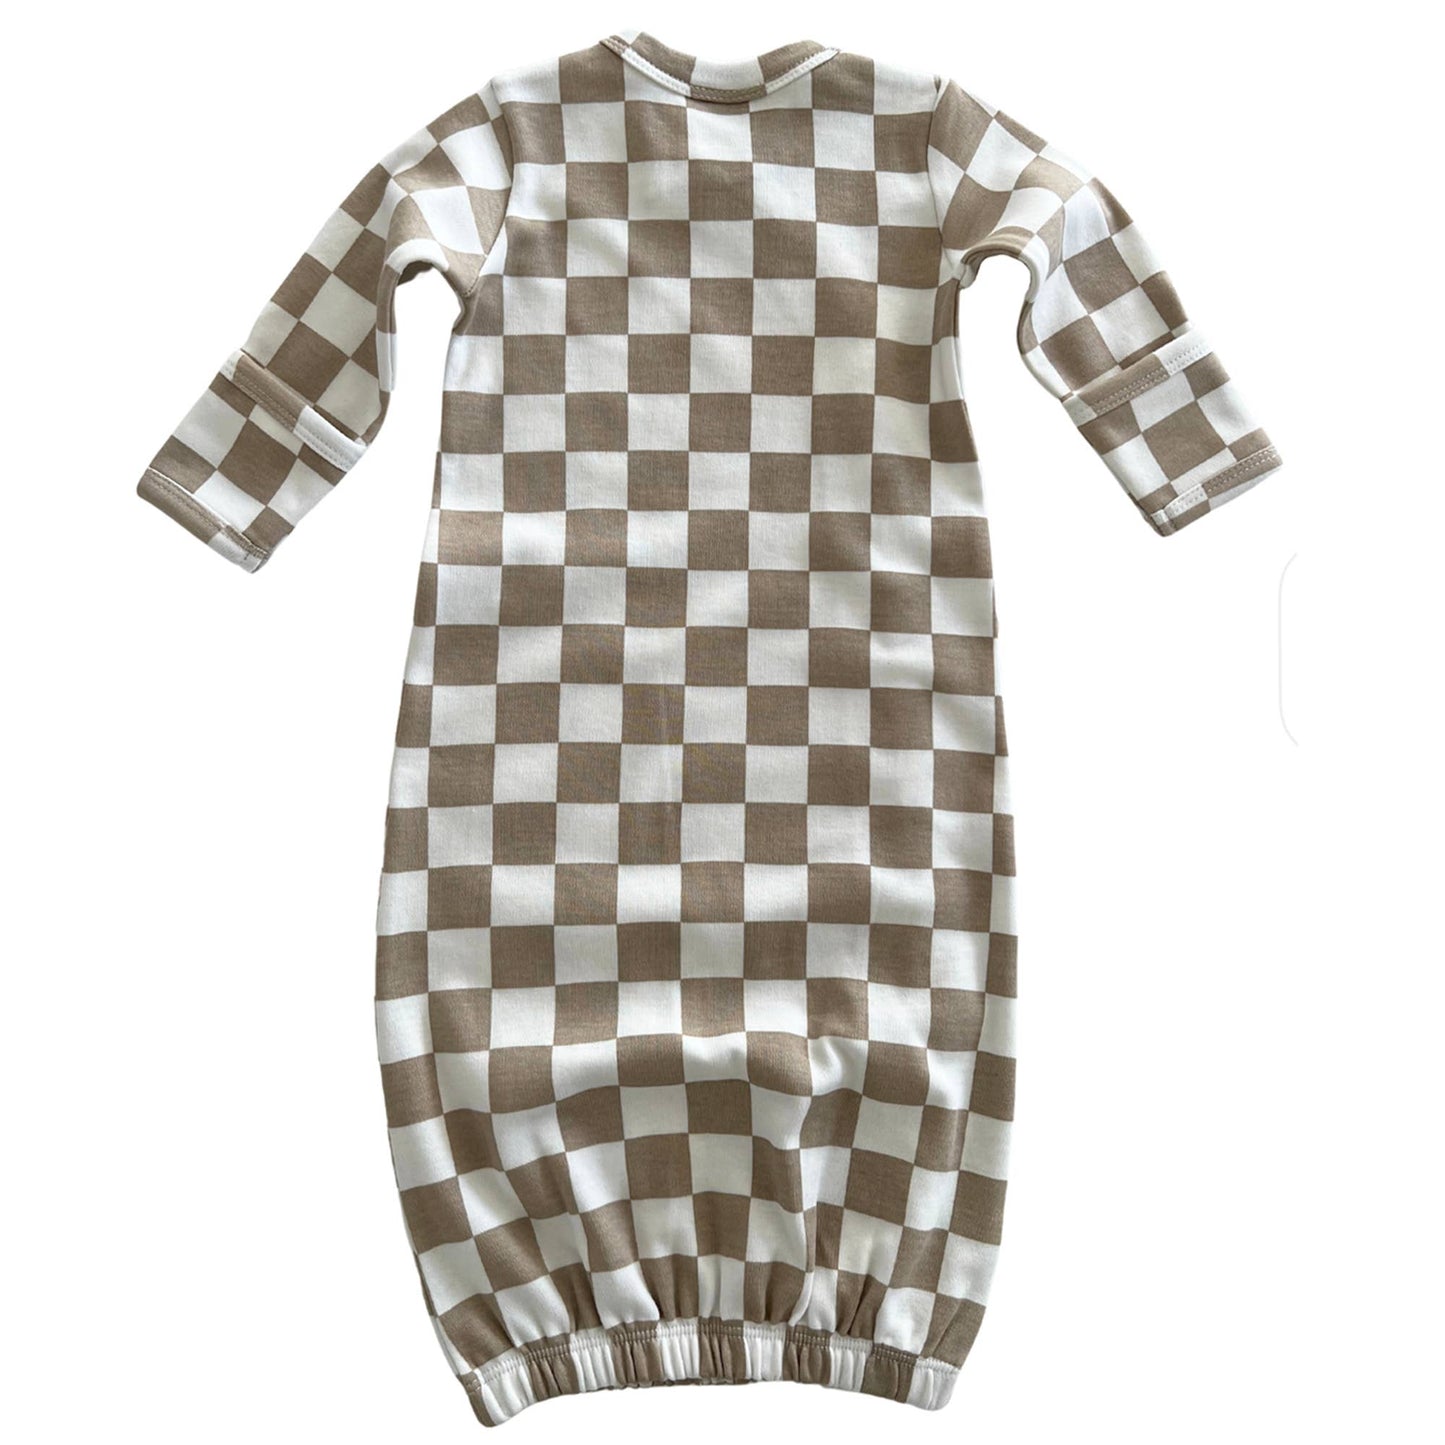 Organic Gown - Tiramisu Checkerboard